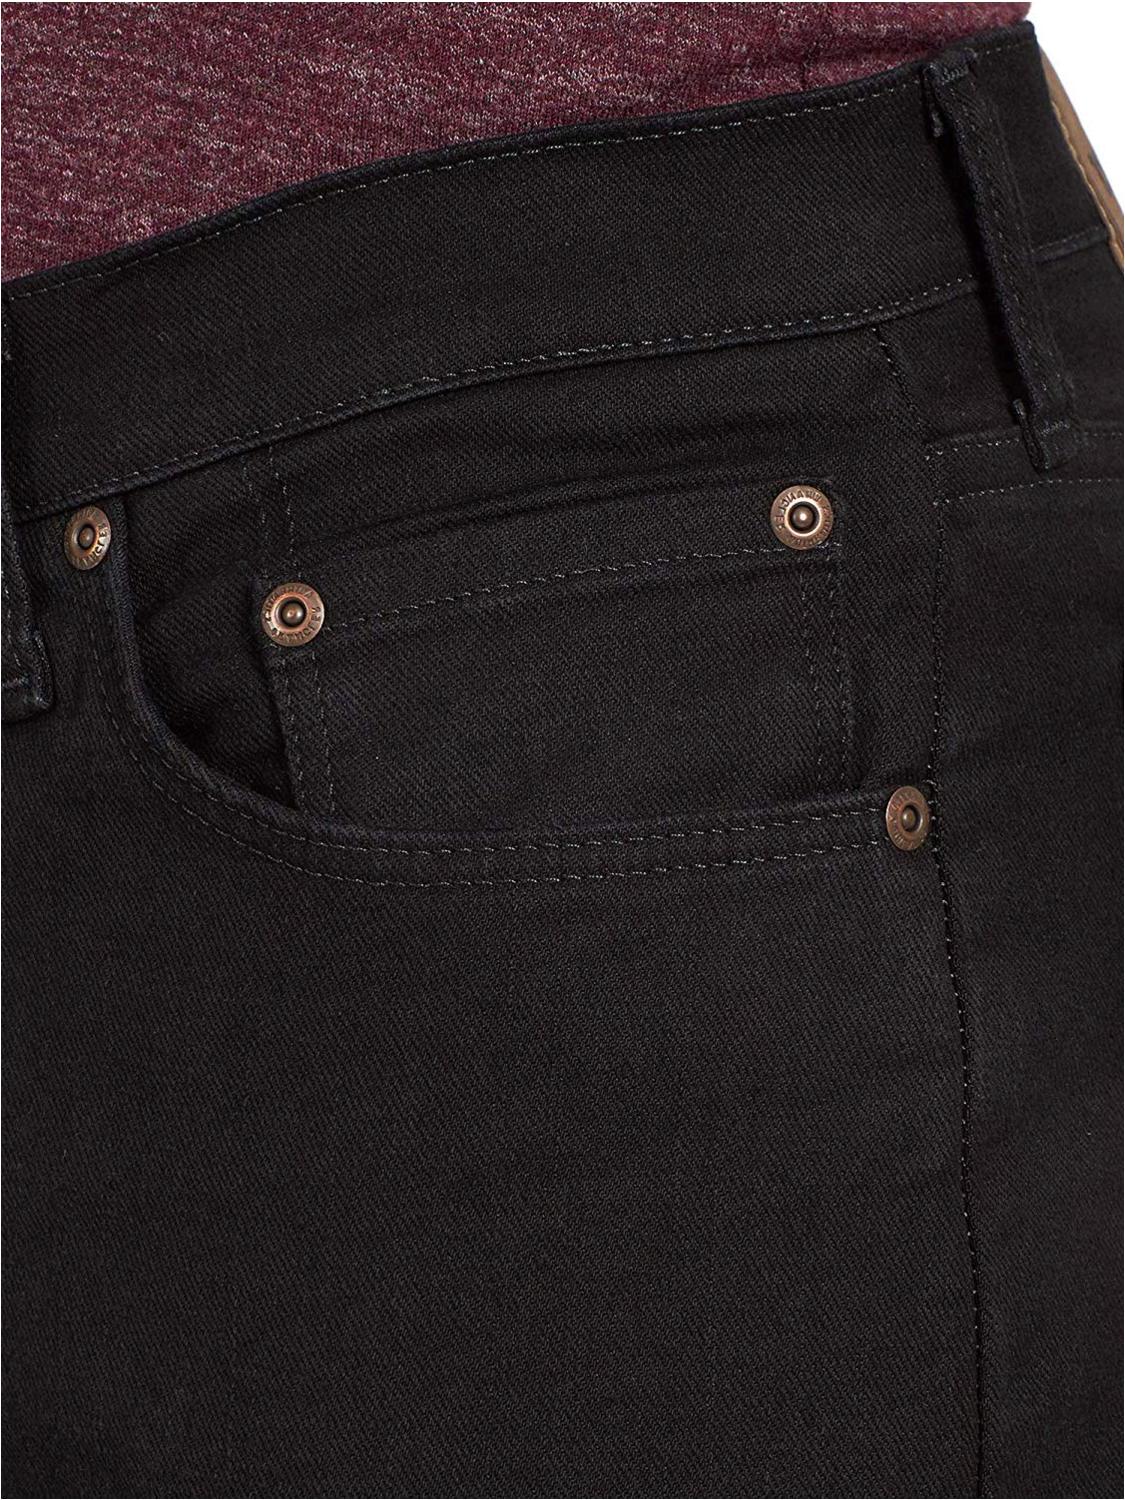 Wrangler Authentics Men's Classic 5-Pocket Regular, Black Flex, Size ...